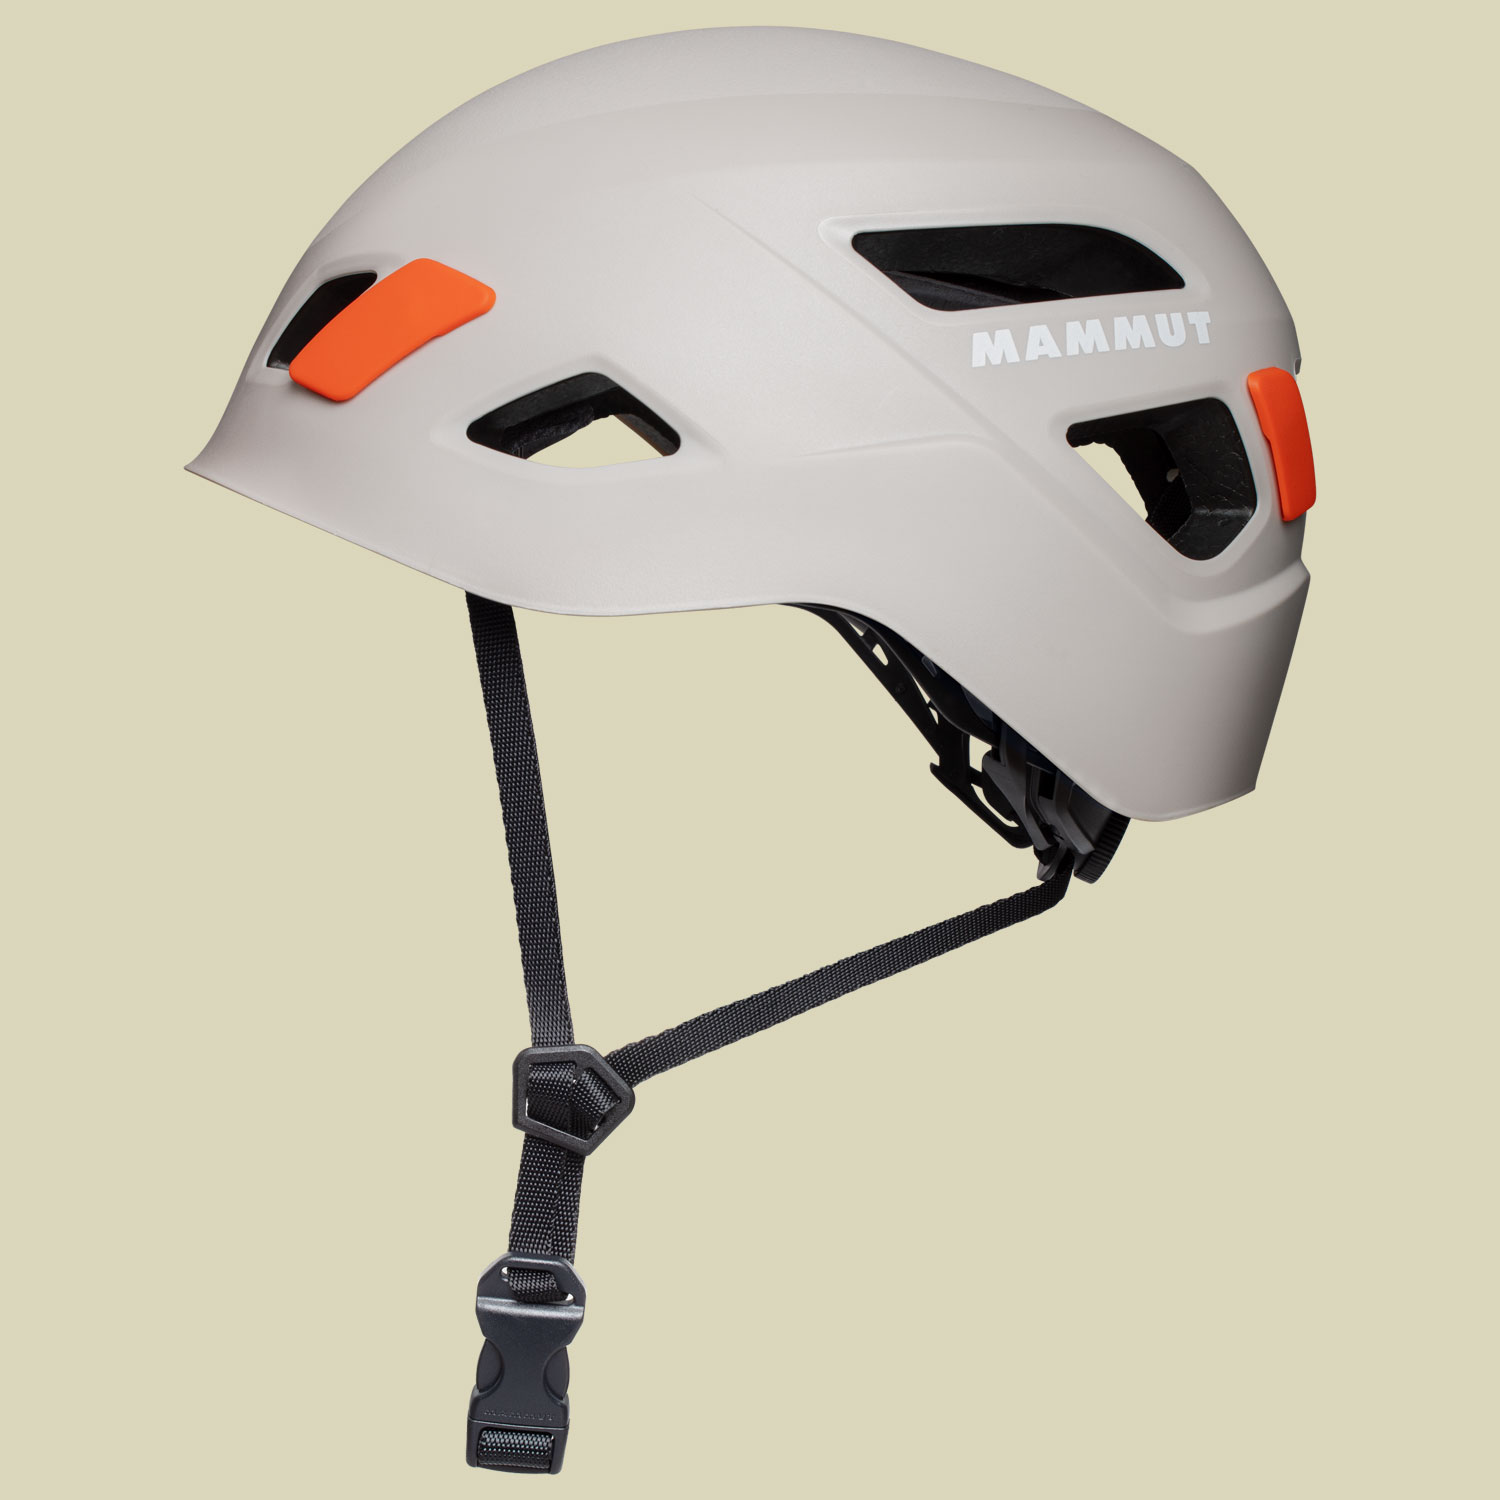 Skywalker 3.0 Helmet grey one size